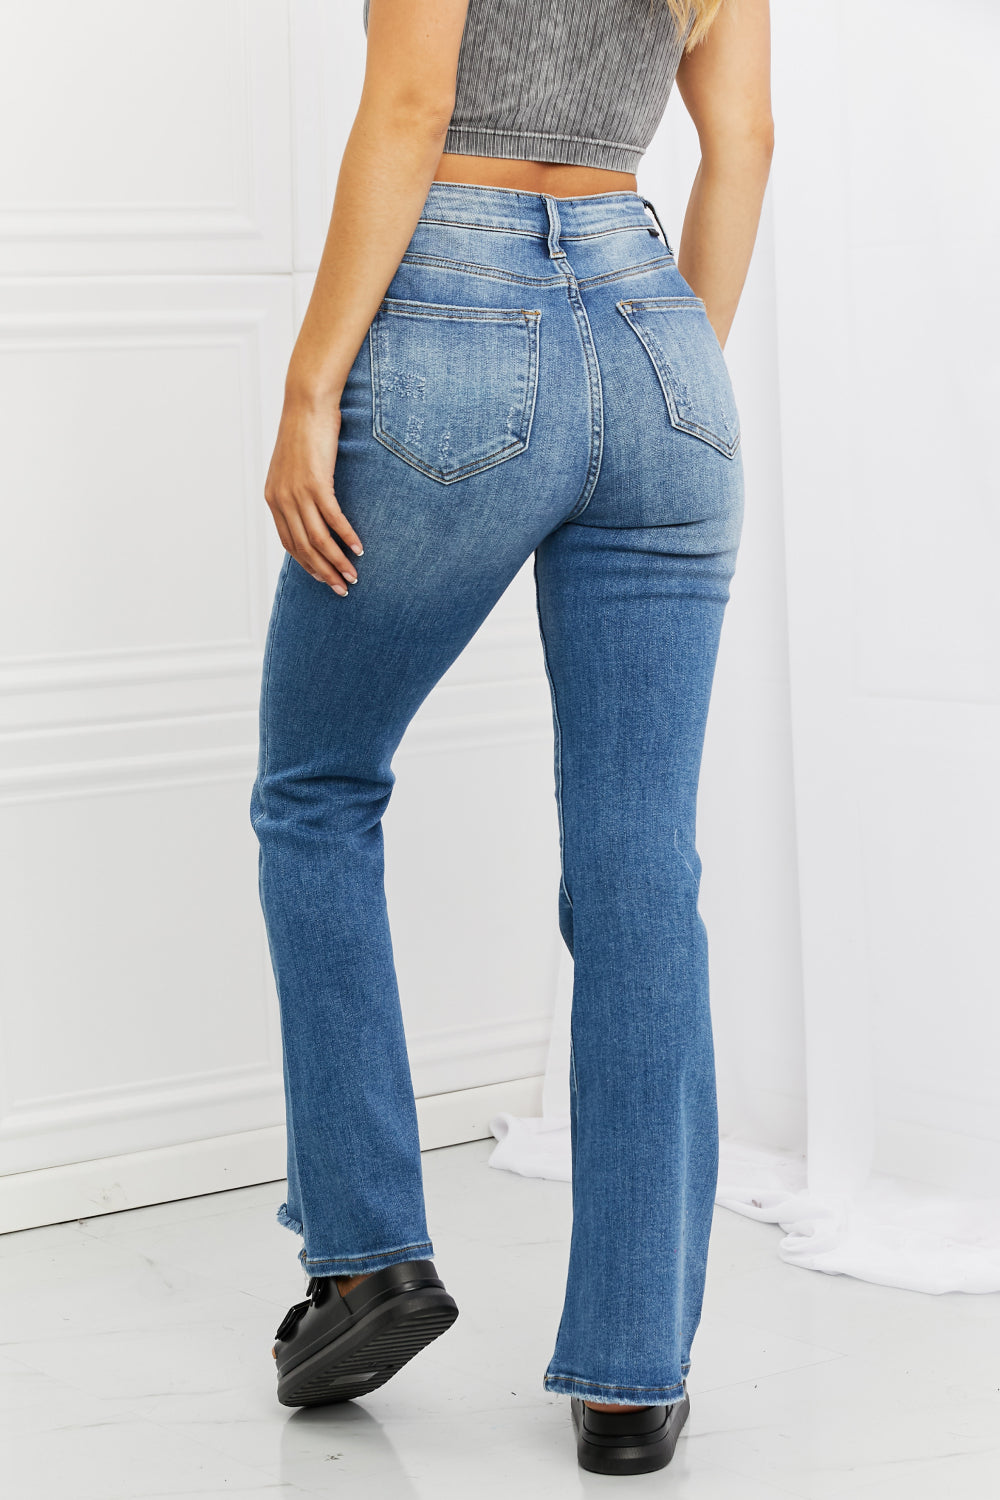 ⭐️ RISEN Iris High-Rise Flare Jeans